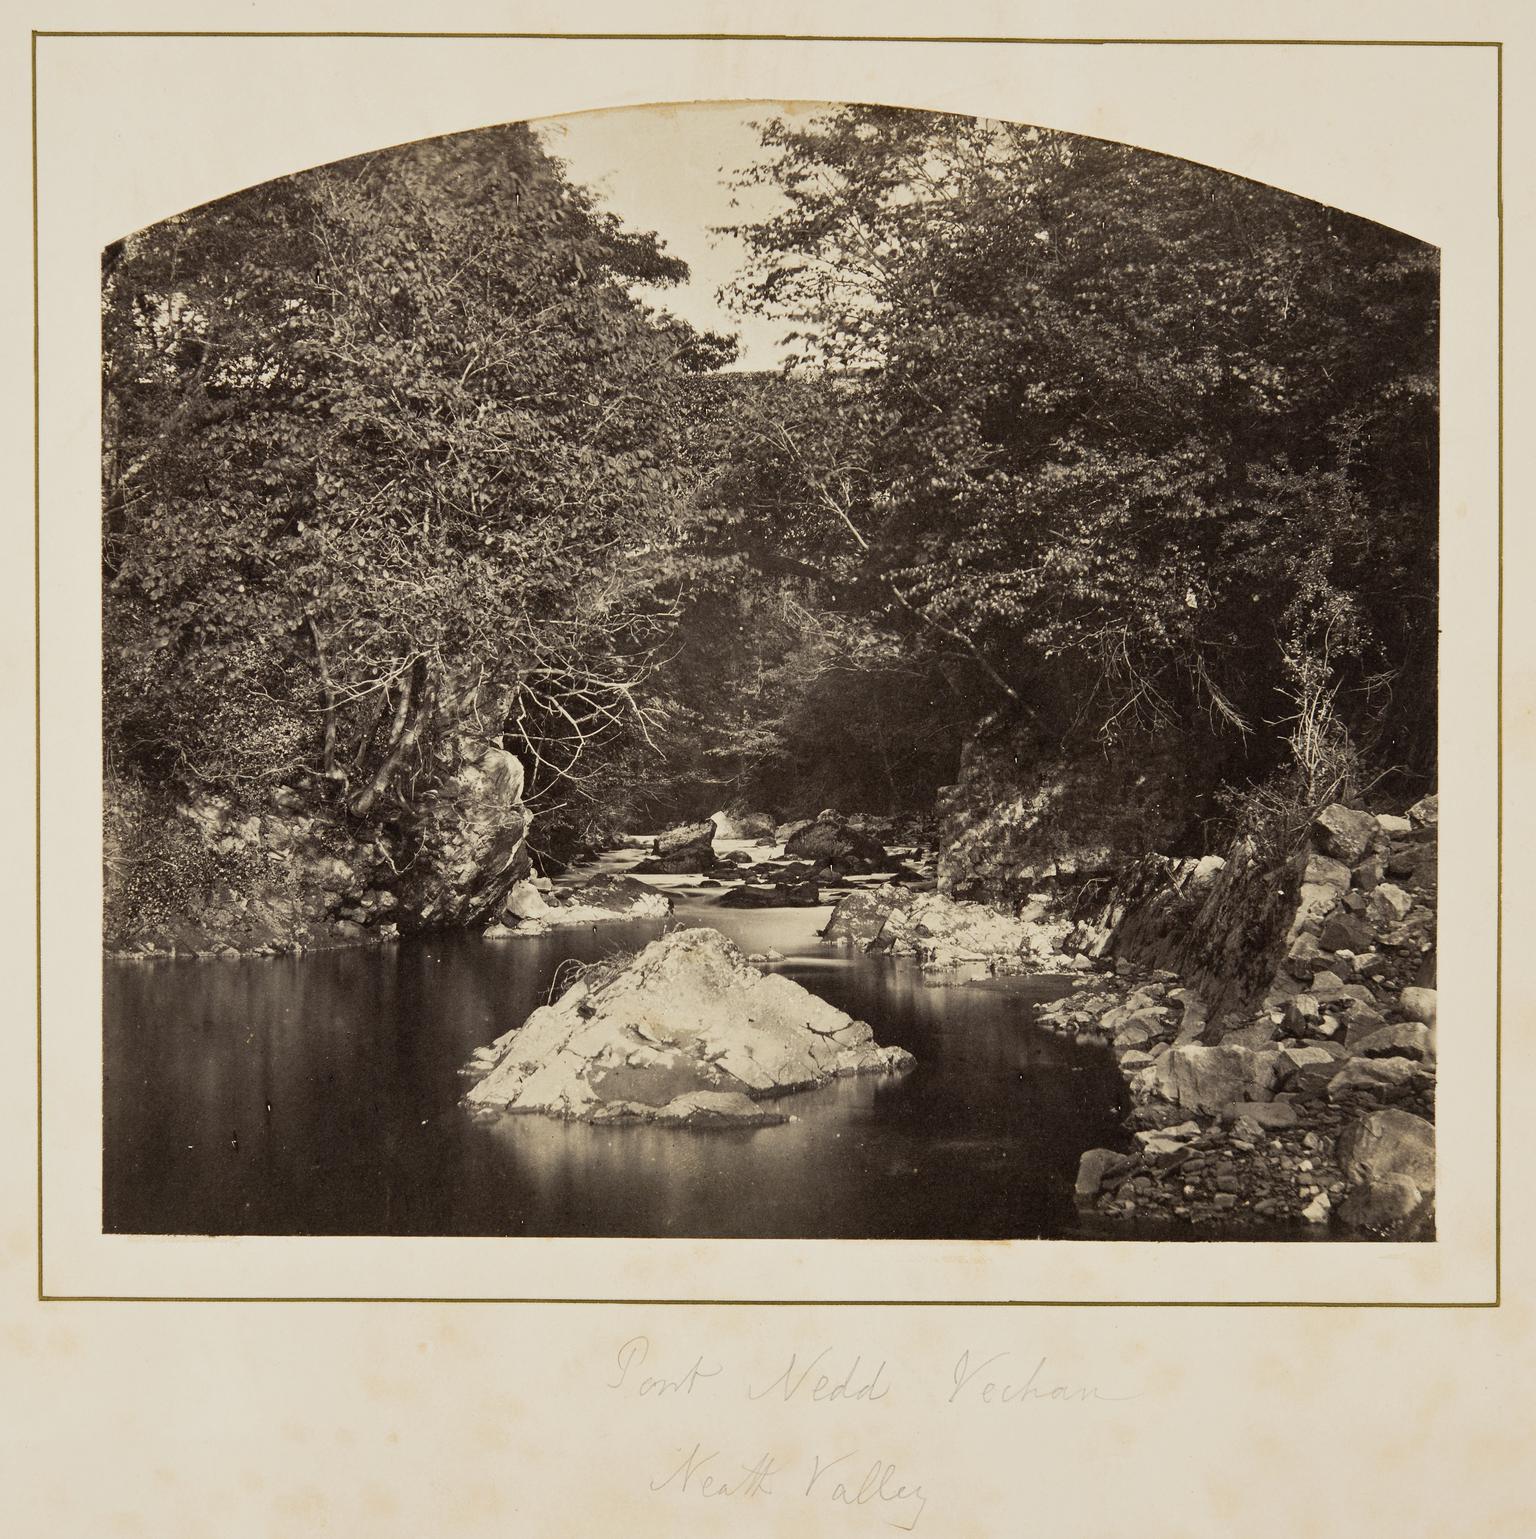 Pont Nedd Vechan Neath Valley (Photograph)